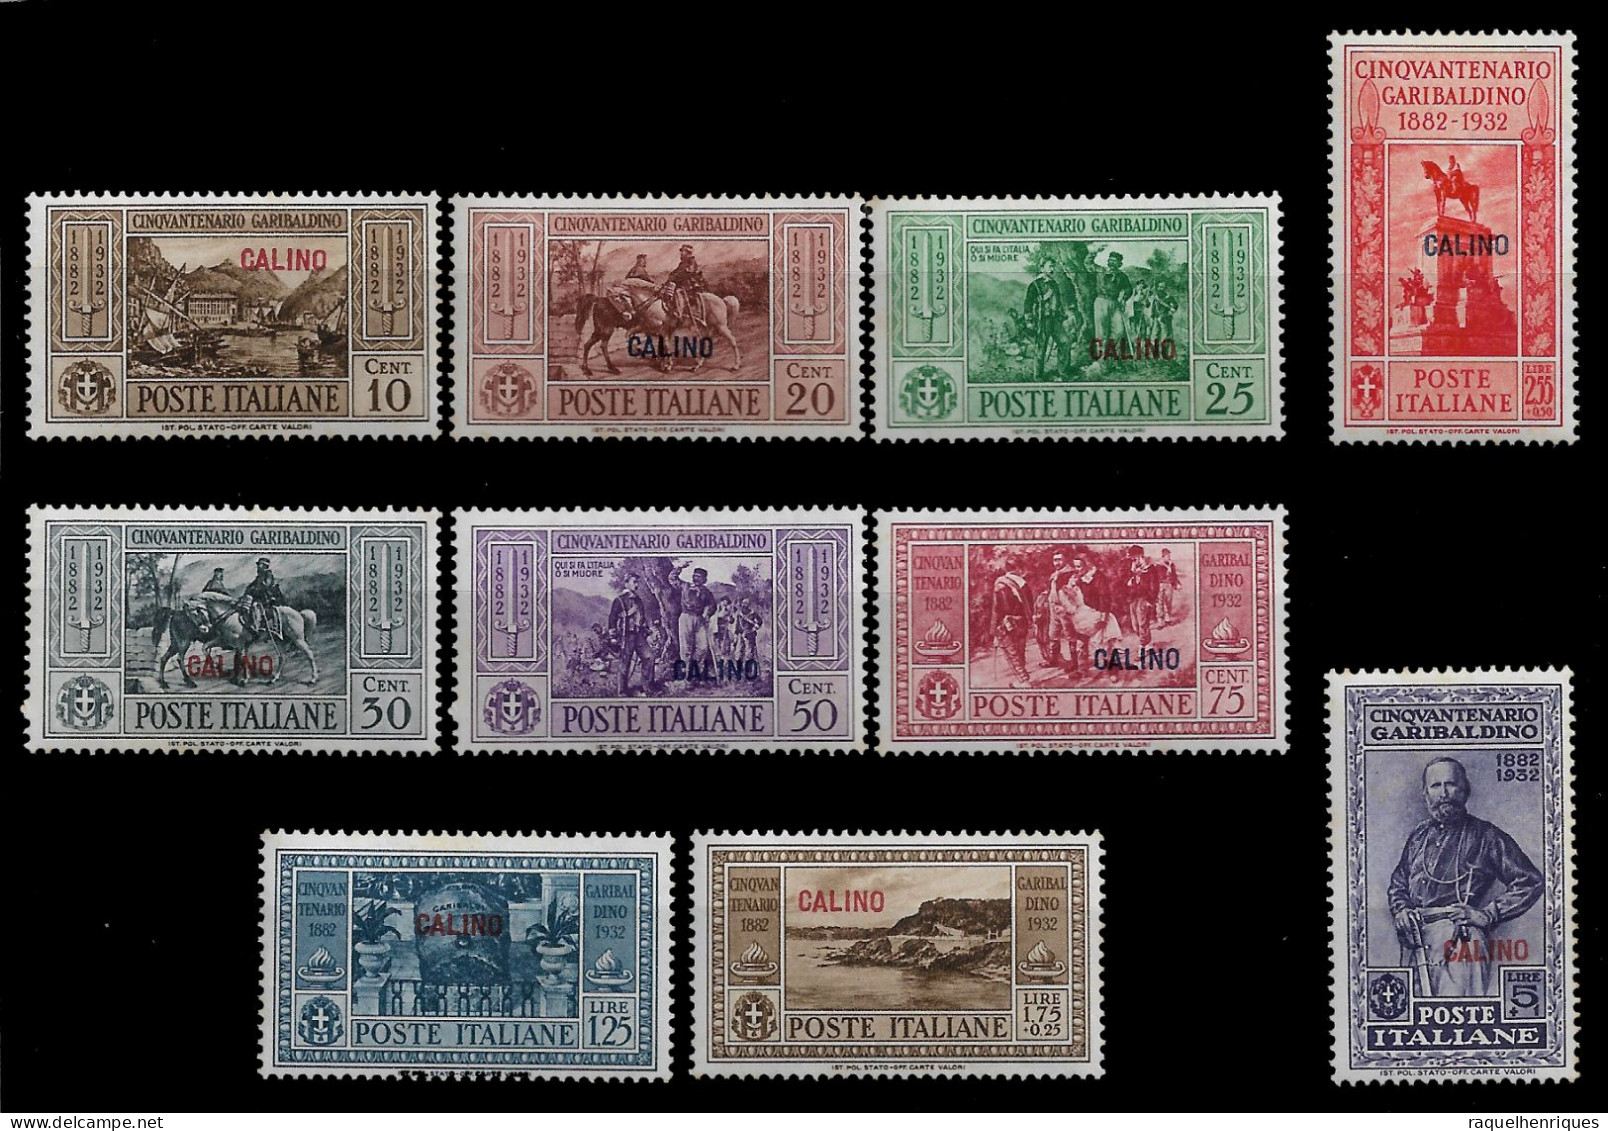 Postage Stamps Of Italian Colonies - CALINO 1932 Giuseppe Garibaldi SET MNH (BA5#402) - Aegean (Calino)